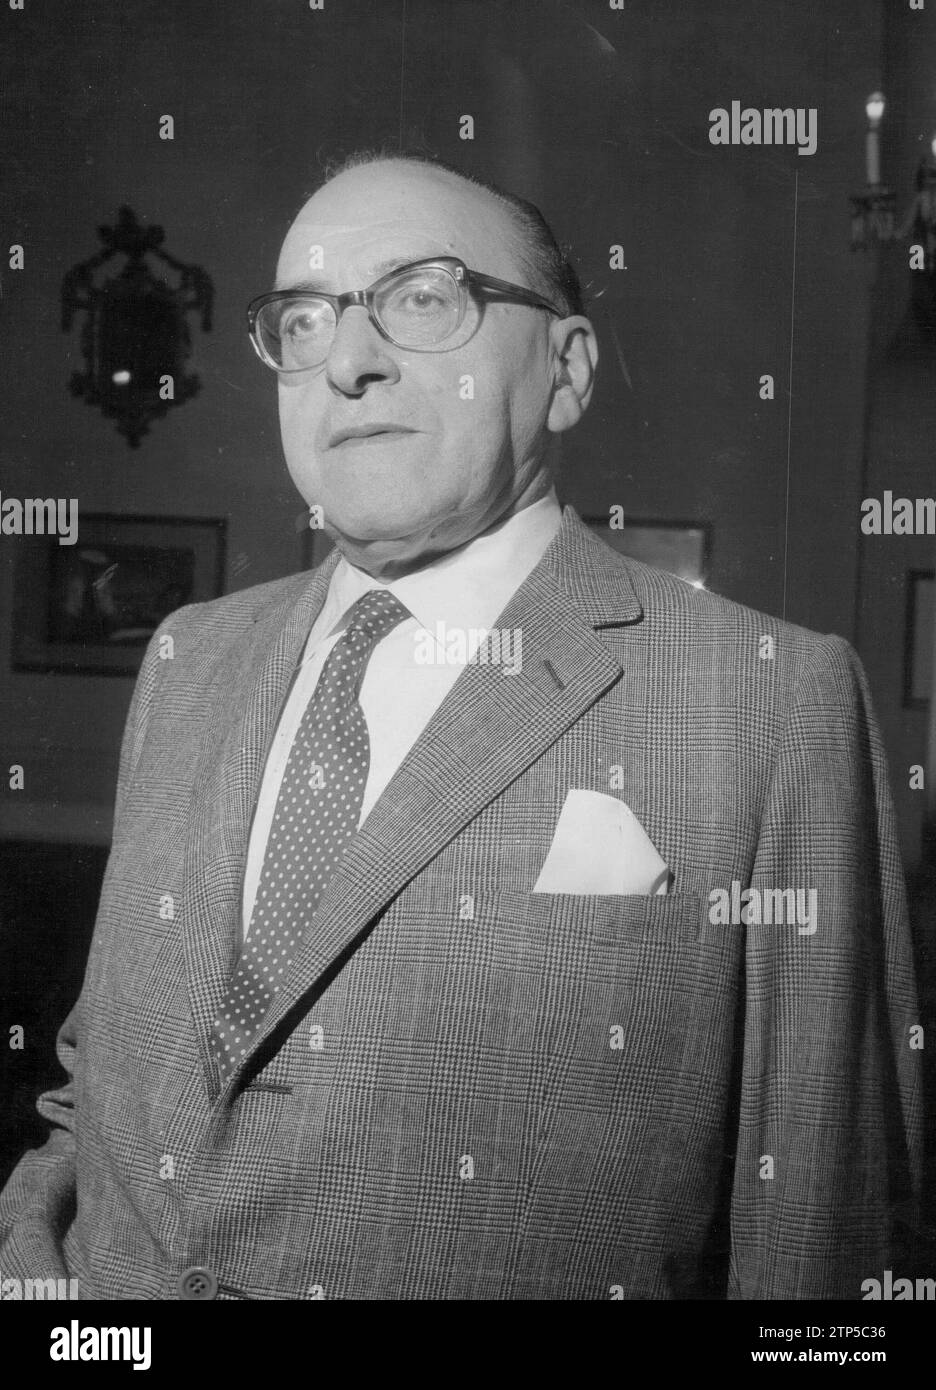 12/31/1964. Mr. Joaquín Arraras Iribarren. Credit: Album / Archivo ABC ...